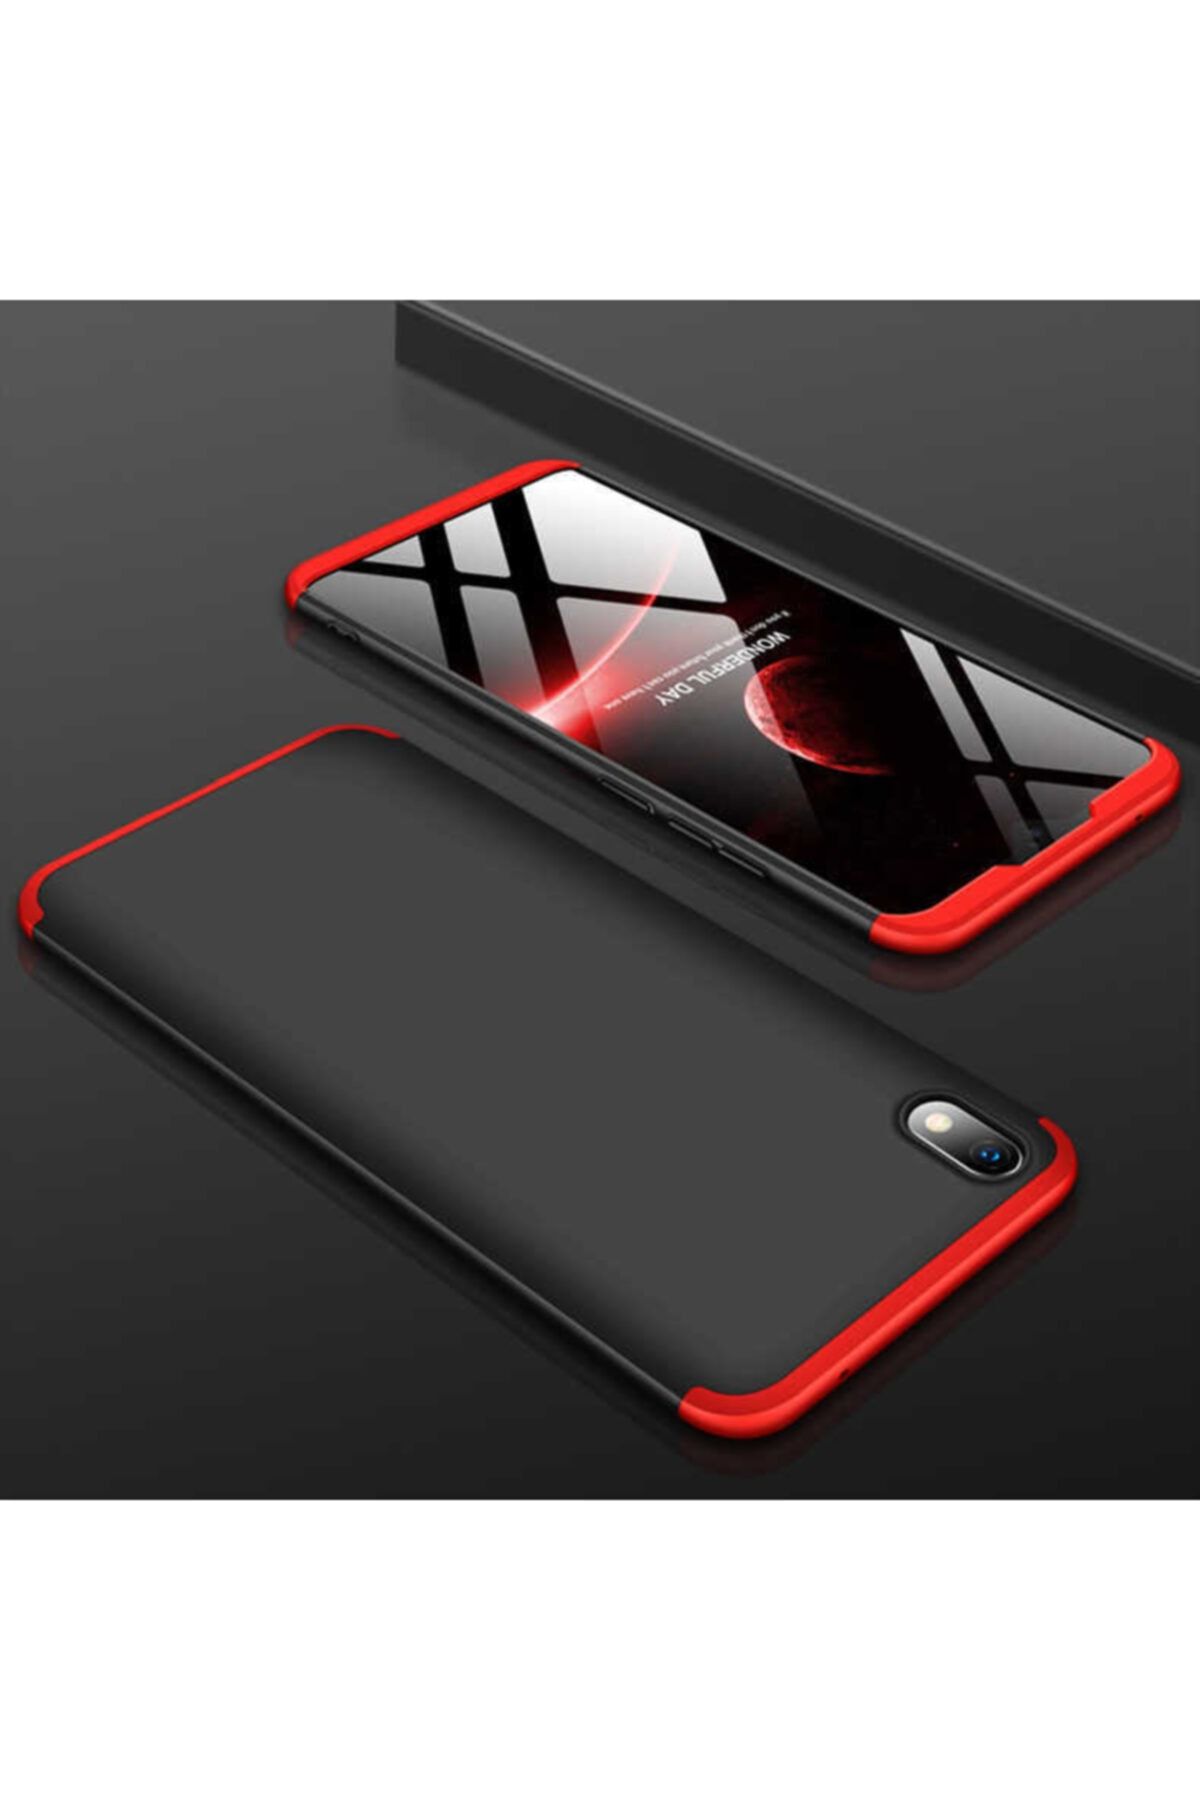 İncisoft Xiaomi Redmi 7a Uyumlu Ultra Ince Full Koruma Ays Kapak Siyah Kırmızı Kılıf